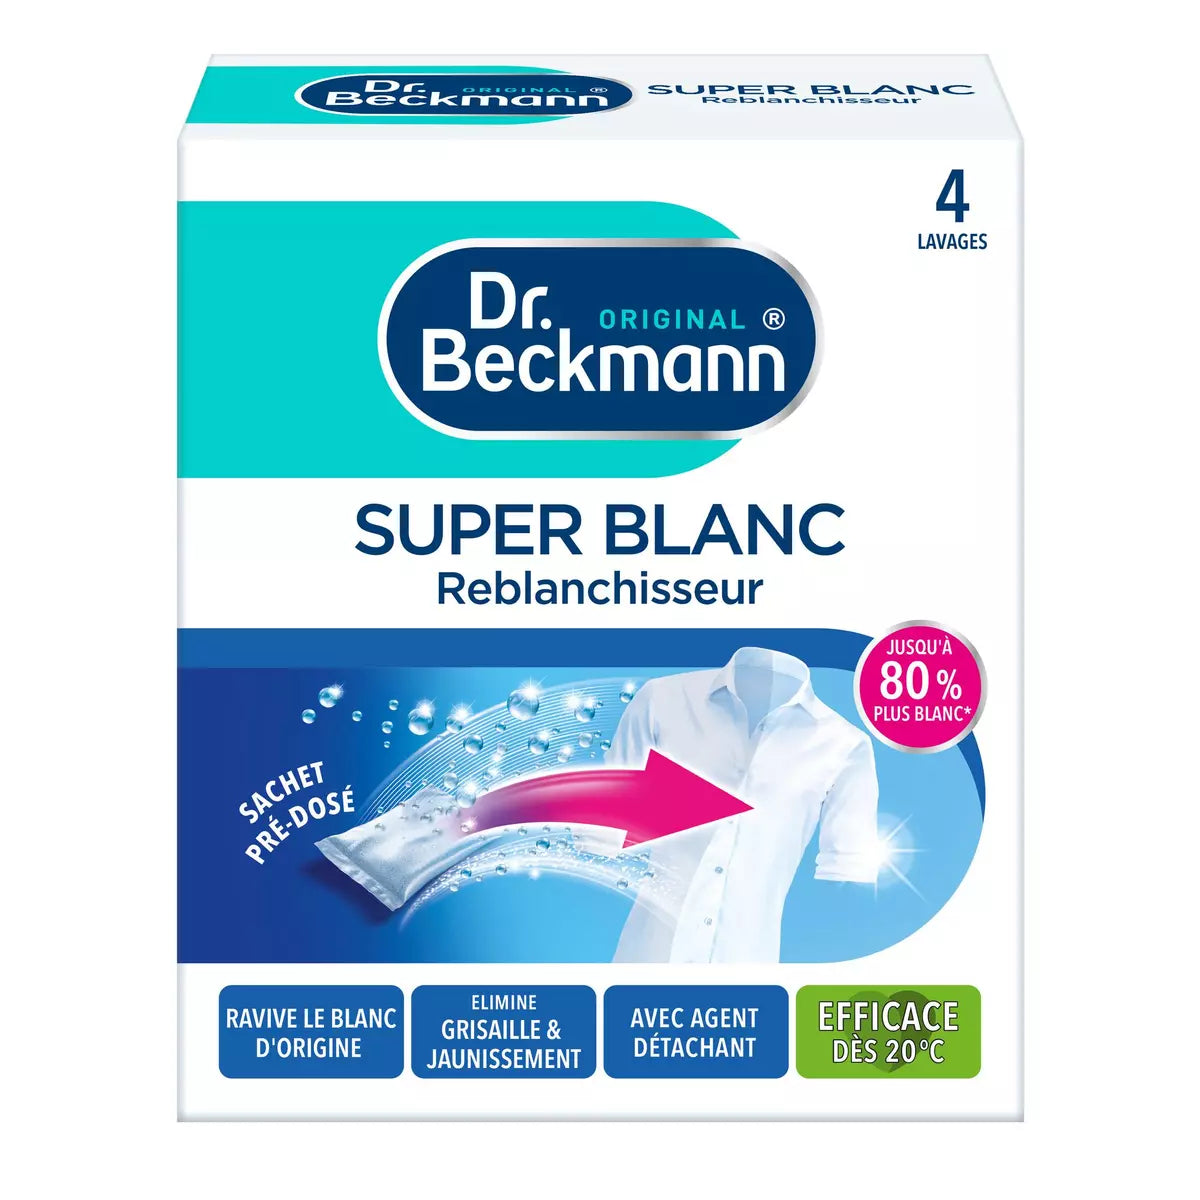 DR. BECKMANN Reblanchisseur super blanc en sachets 160g -k63